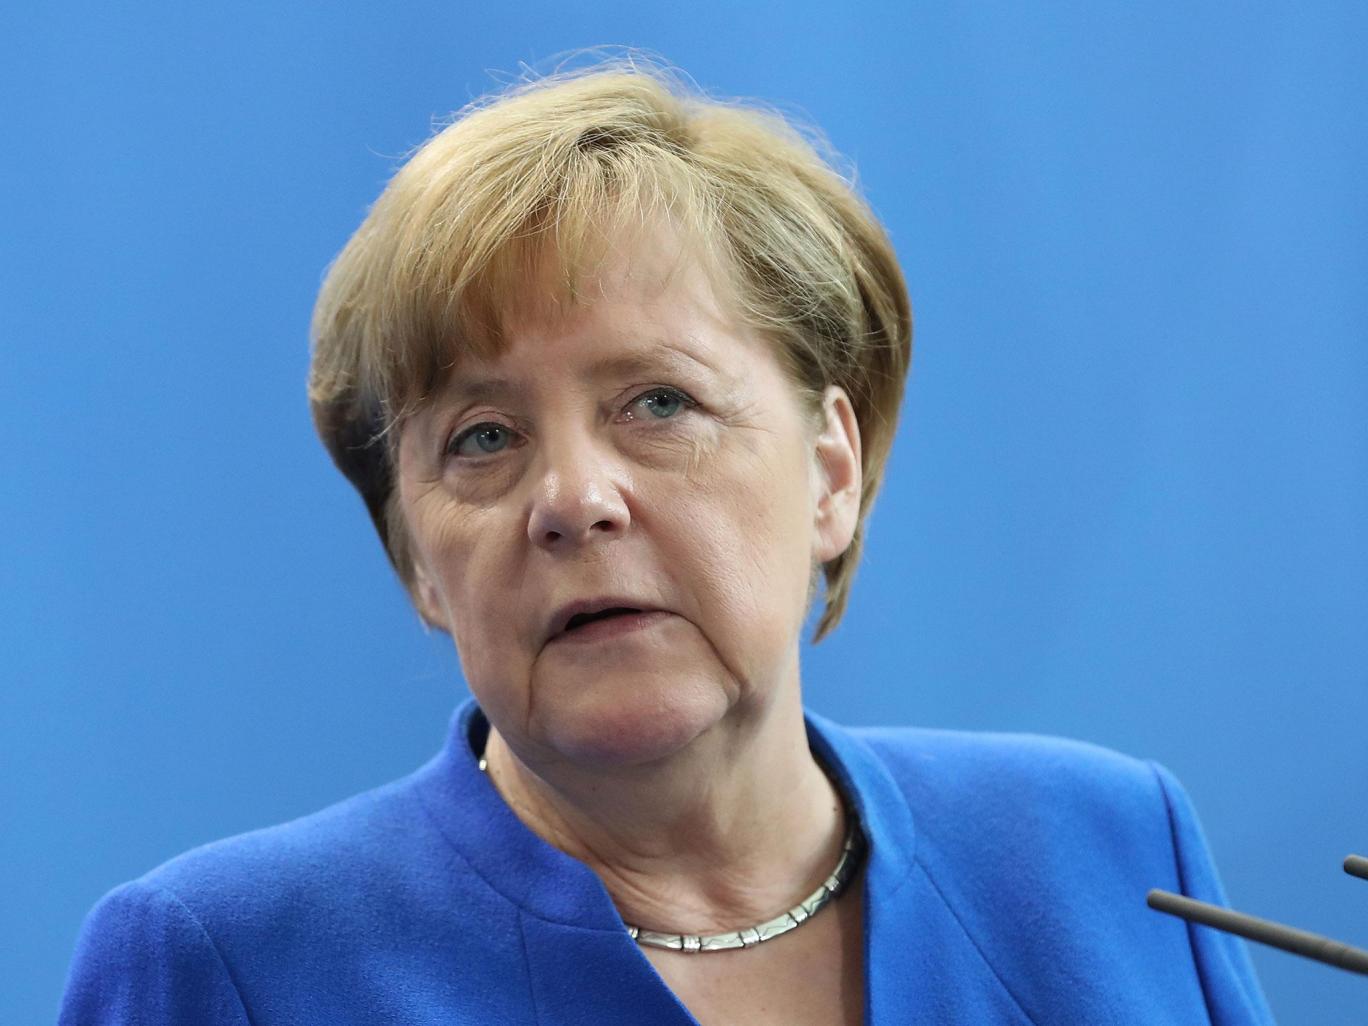 Where Donald Trump fails, Angela Merkel succeeds